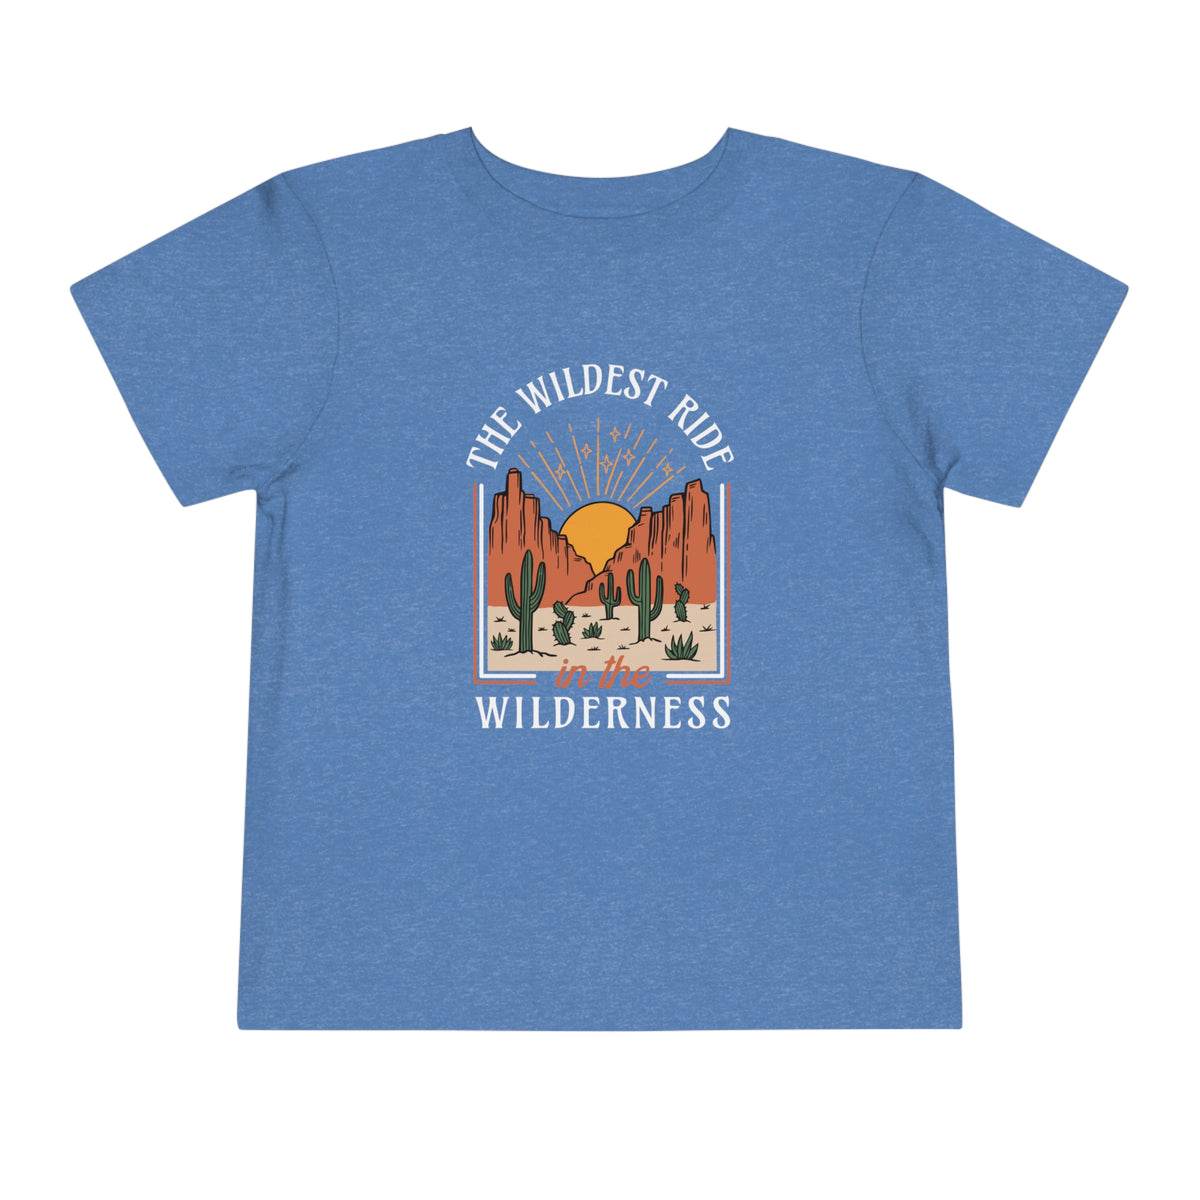 The Wildest Ride In The Wilderness Bella Canvas Toddler Short Sleeve Tee